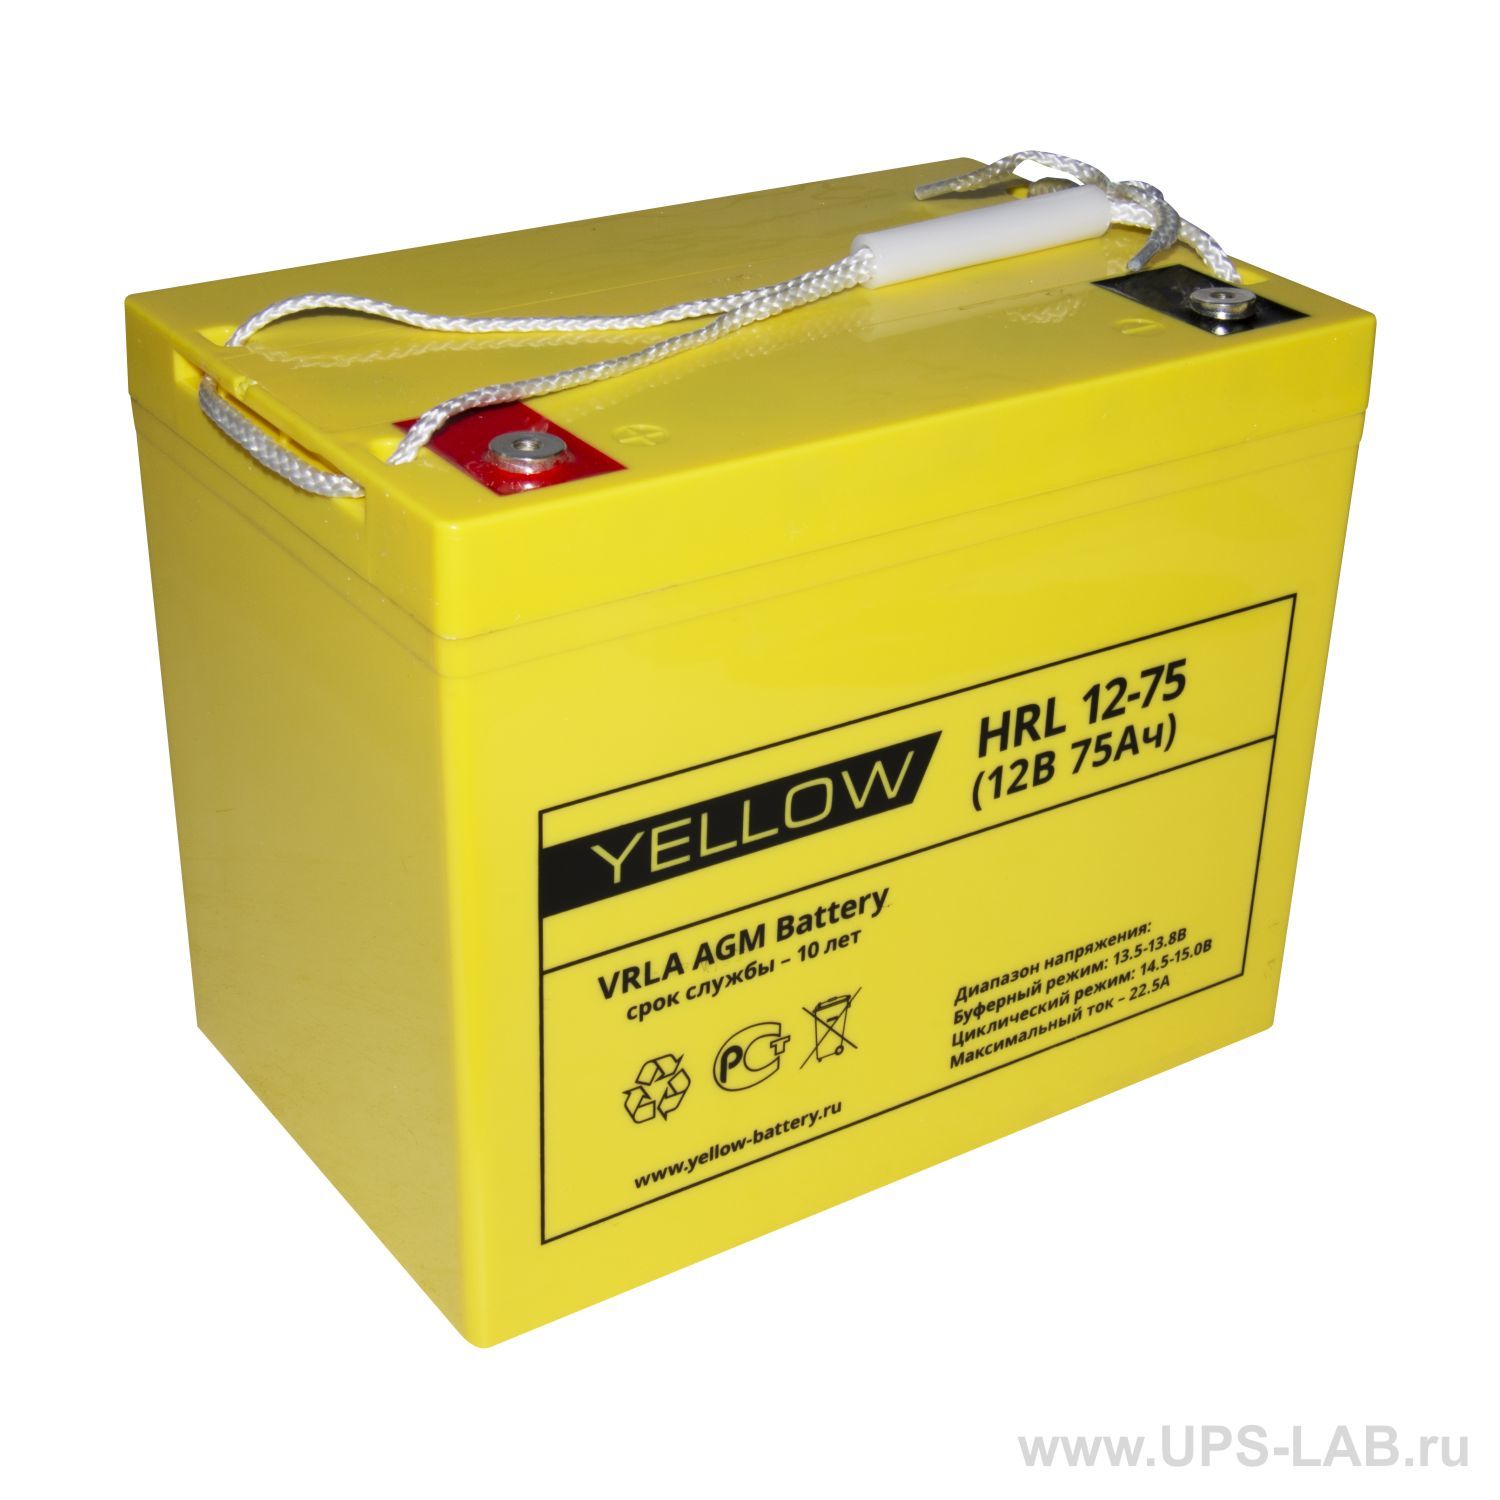 S 75 12. Аккумулятор Yellow HRL 12-100. Аккумуляторы Yellow Battery 12v 75 Ah. Аккумулятор Yellow HRL 12-33. Бк800 Yellow hrl12-100.